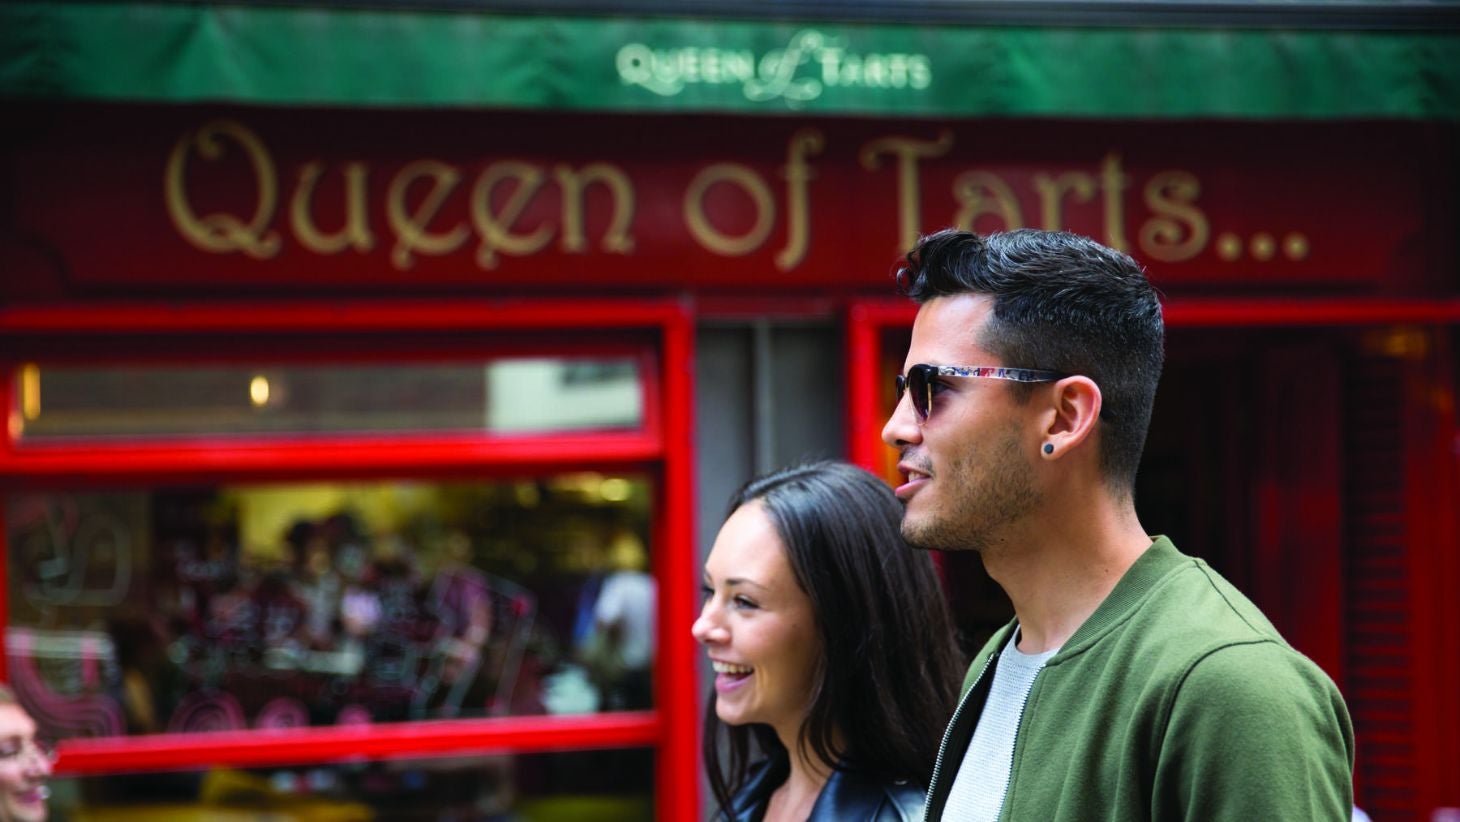 Friends walking past Queen of Tarts in Temple Bar, Dublin.